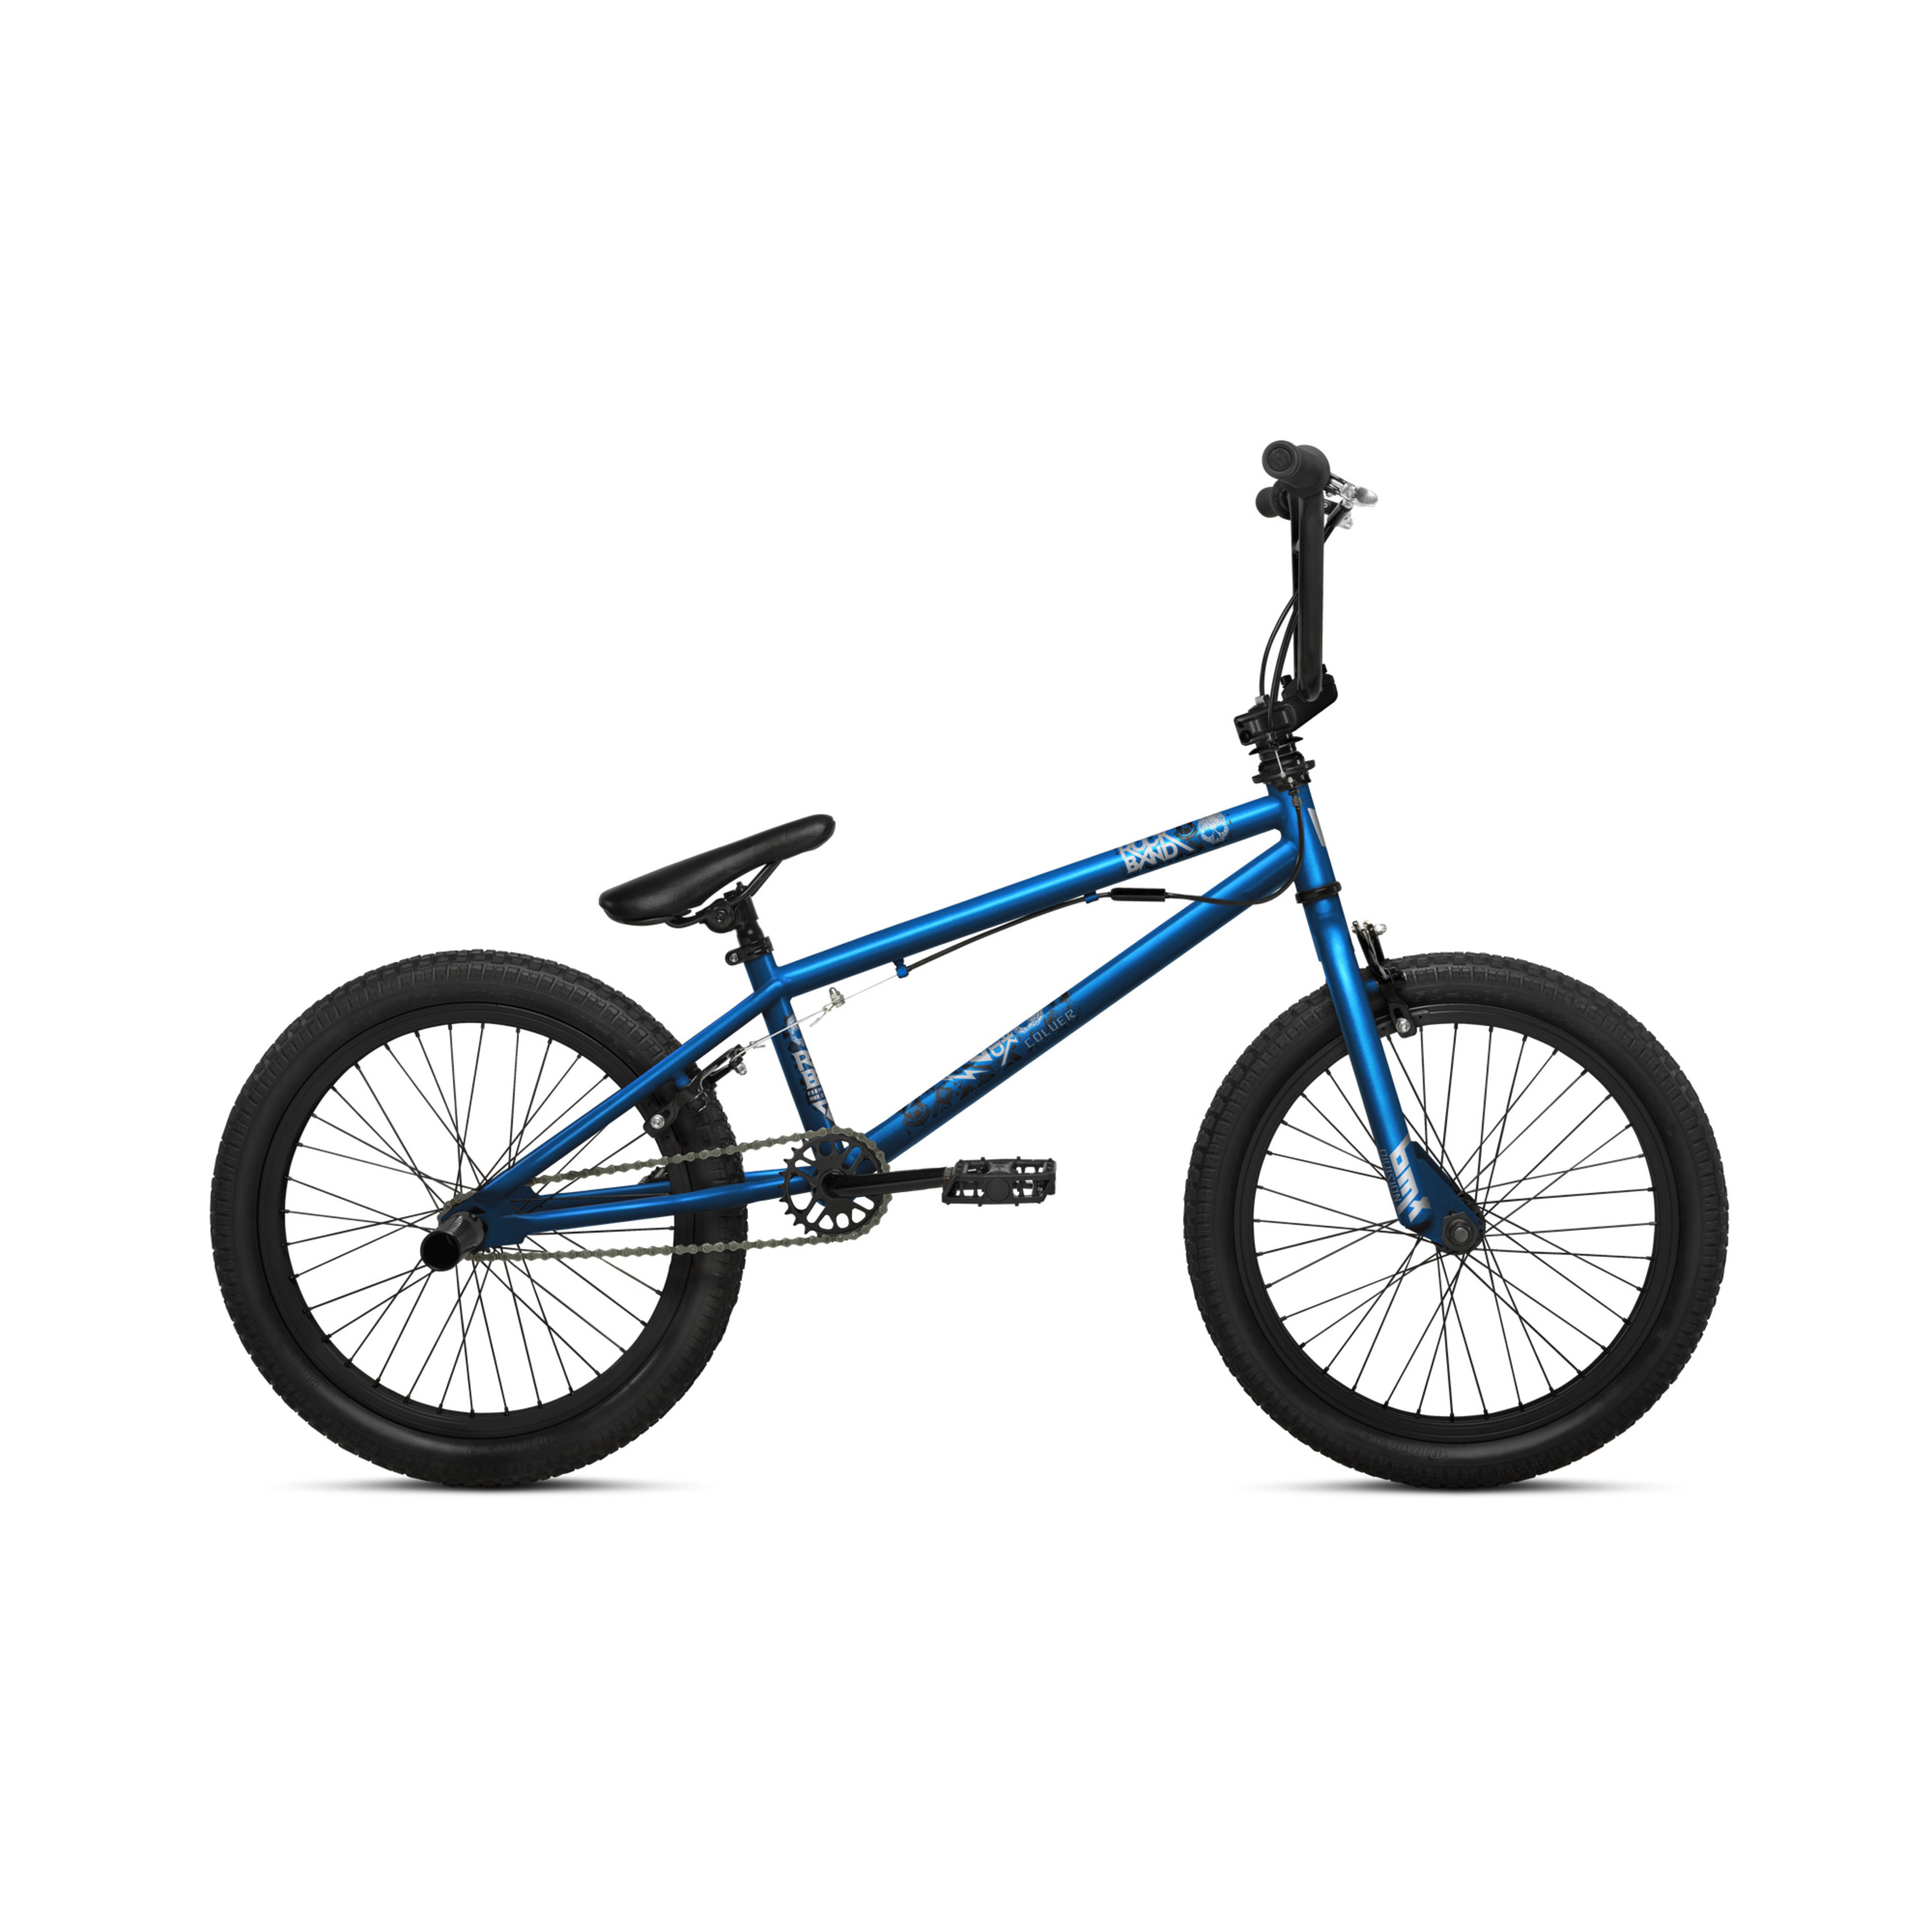 Bicicleta Bmx Coluer Rockband - Azul - Bicicleta Bmx Coluer Rockband Azul  MKP